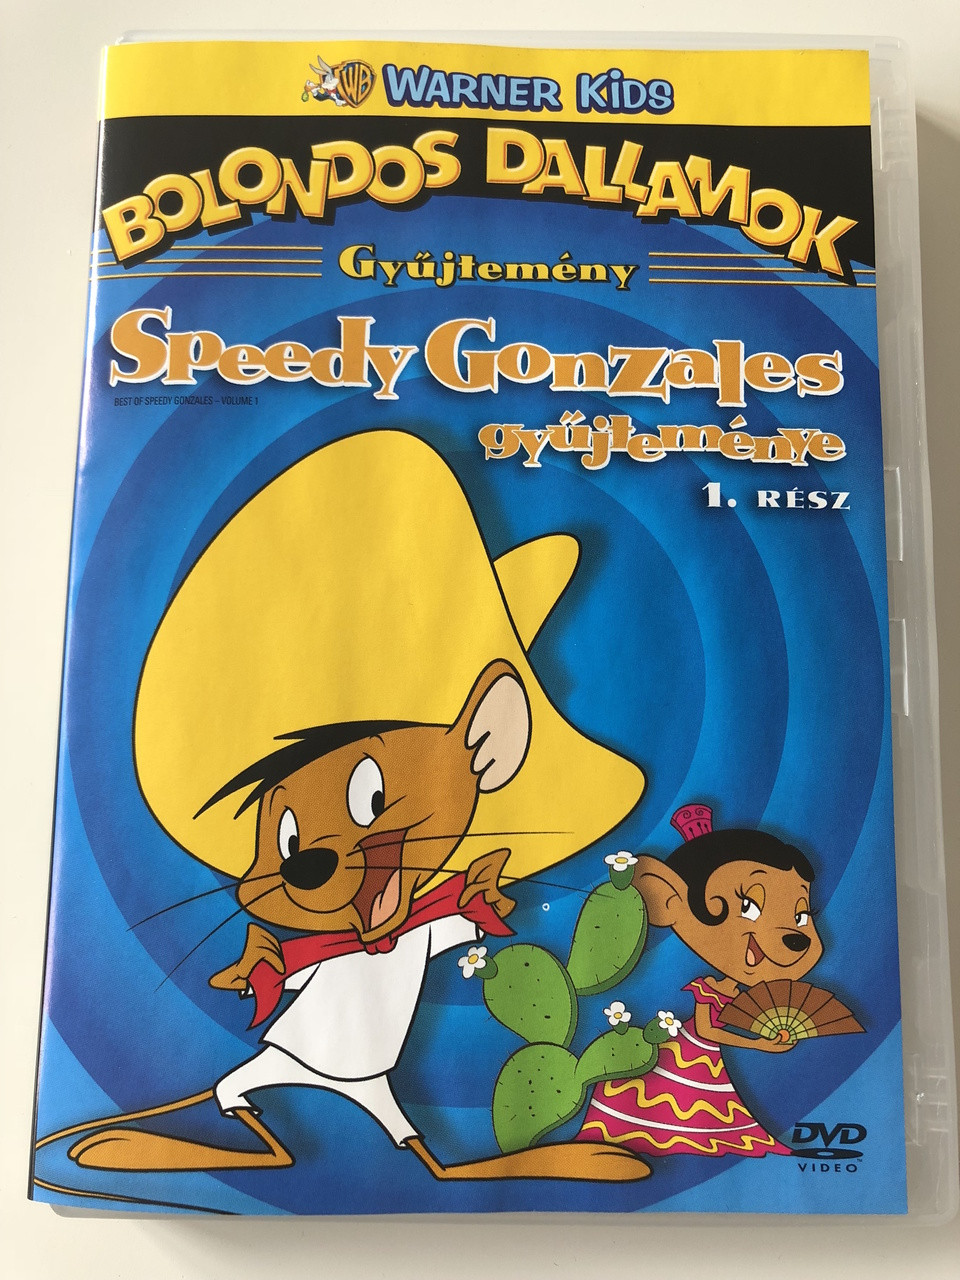 Looney Tunes Collection - Best of Speedy Gonzales - Volume 1 DVD 2006  Bolondos Dallamok - Speedy Gonzales Gyűjteménye 1. rész / Created by Friz  Freleng, Hawley Pratt / 14 Episodes on this DVD - bibleinmylanguage